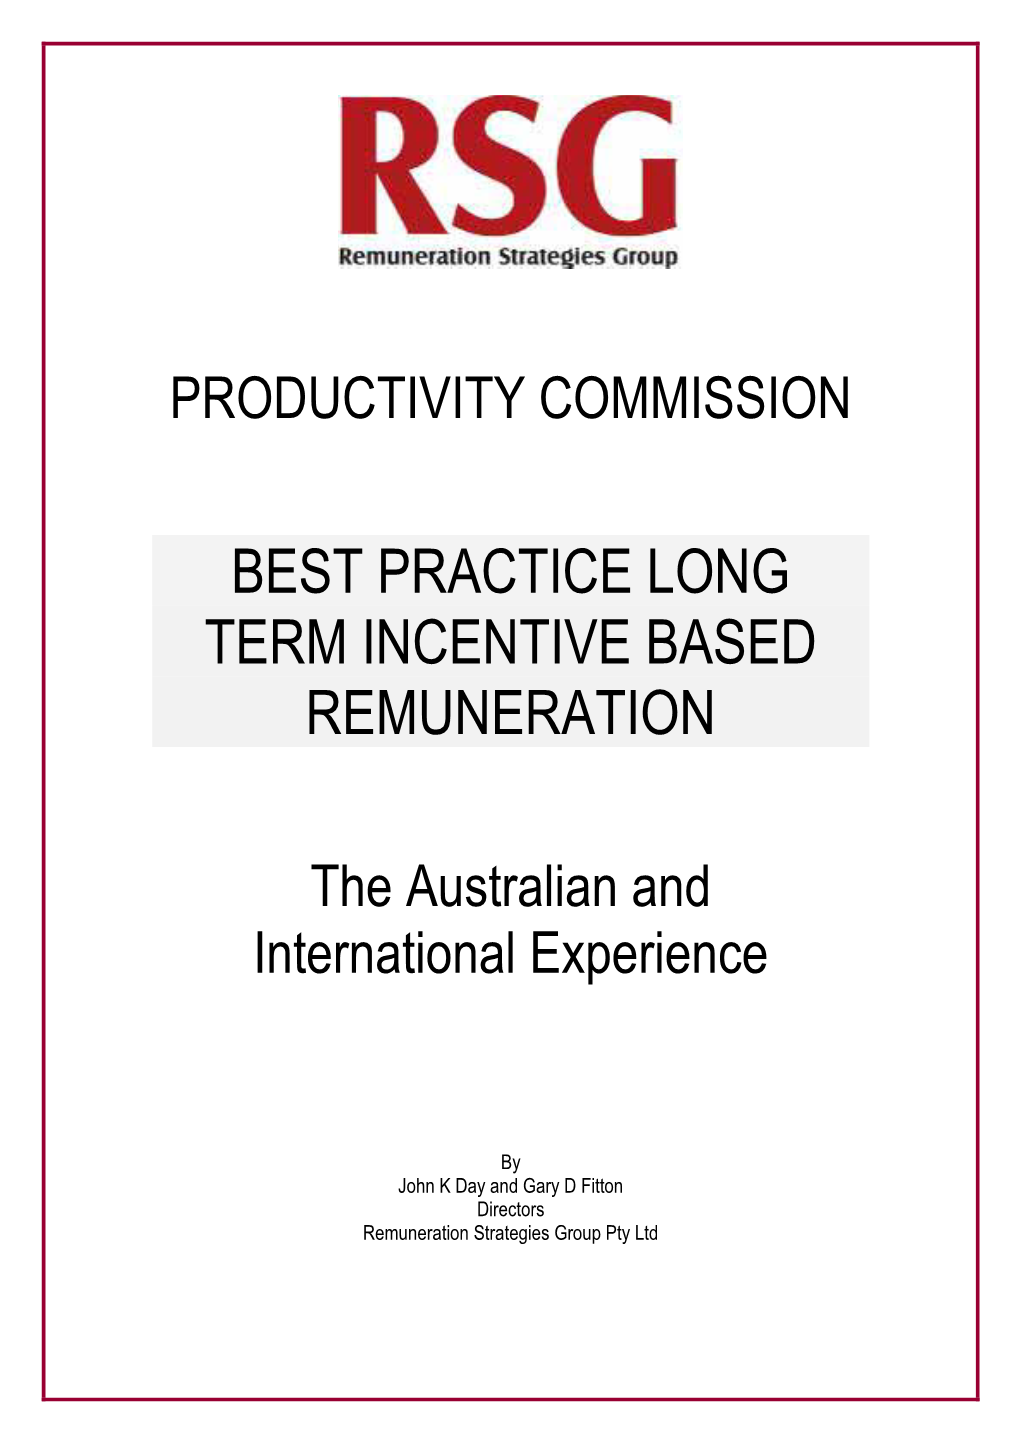 Best Practice Long Term Incentive Based Remuneration